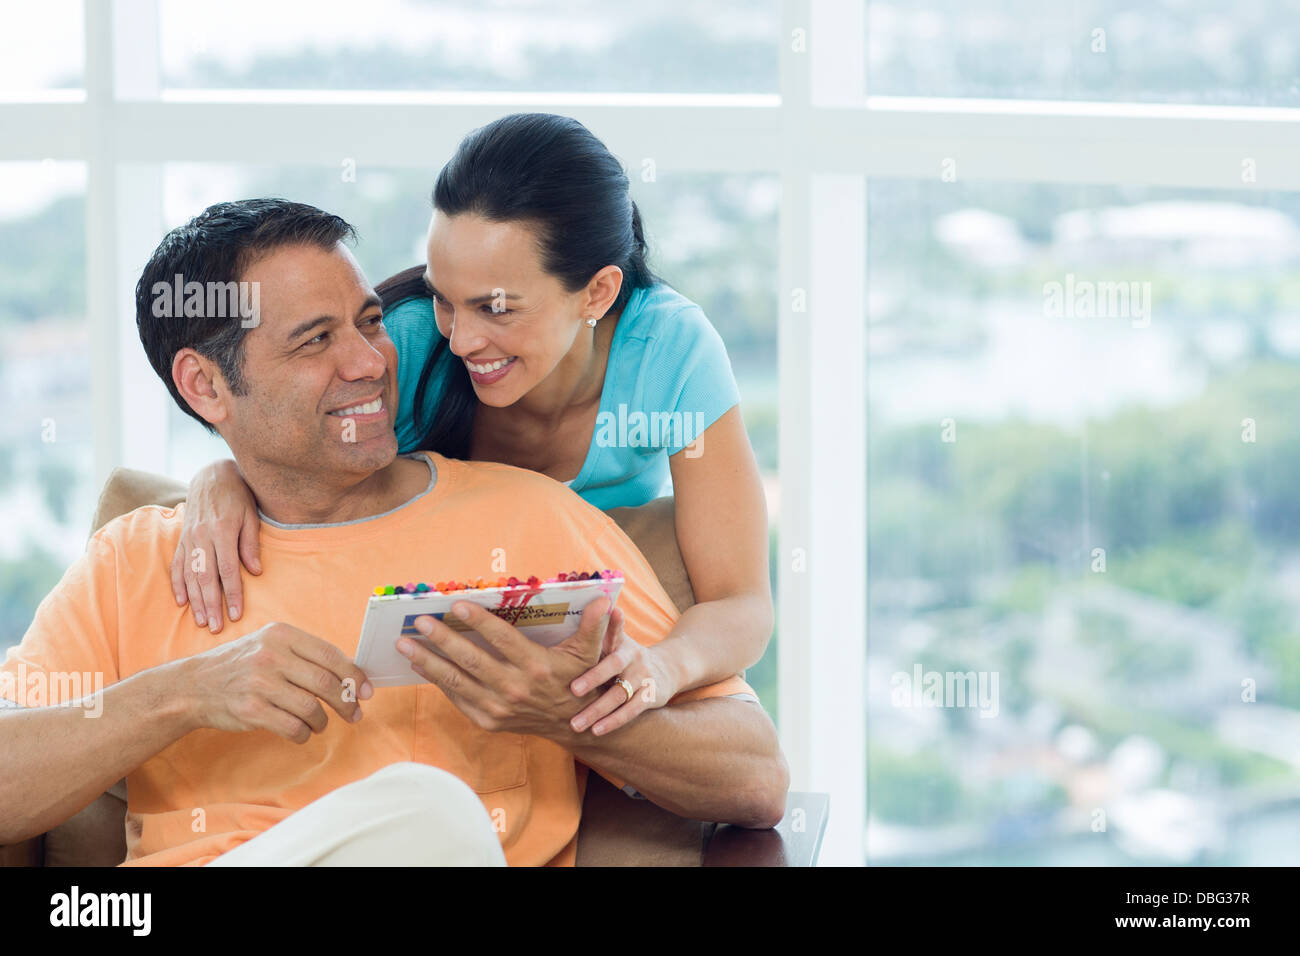 Hispanic couple hugging in armchair Stock Photo